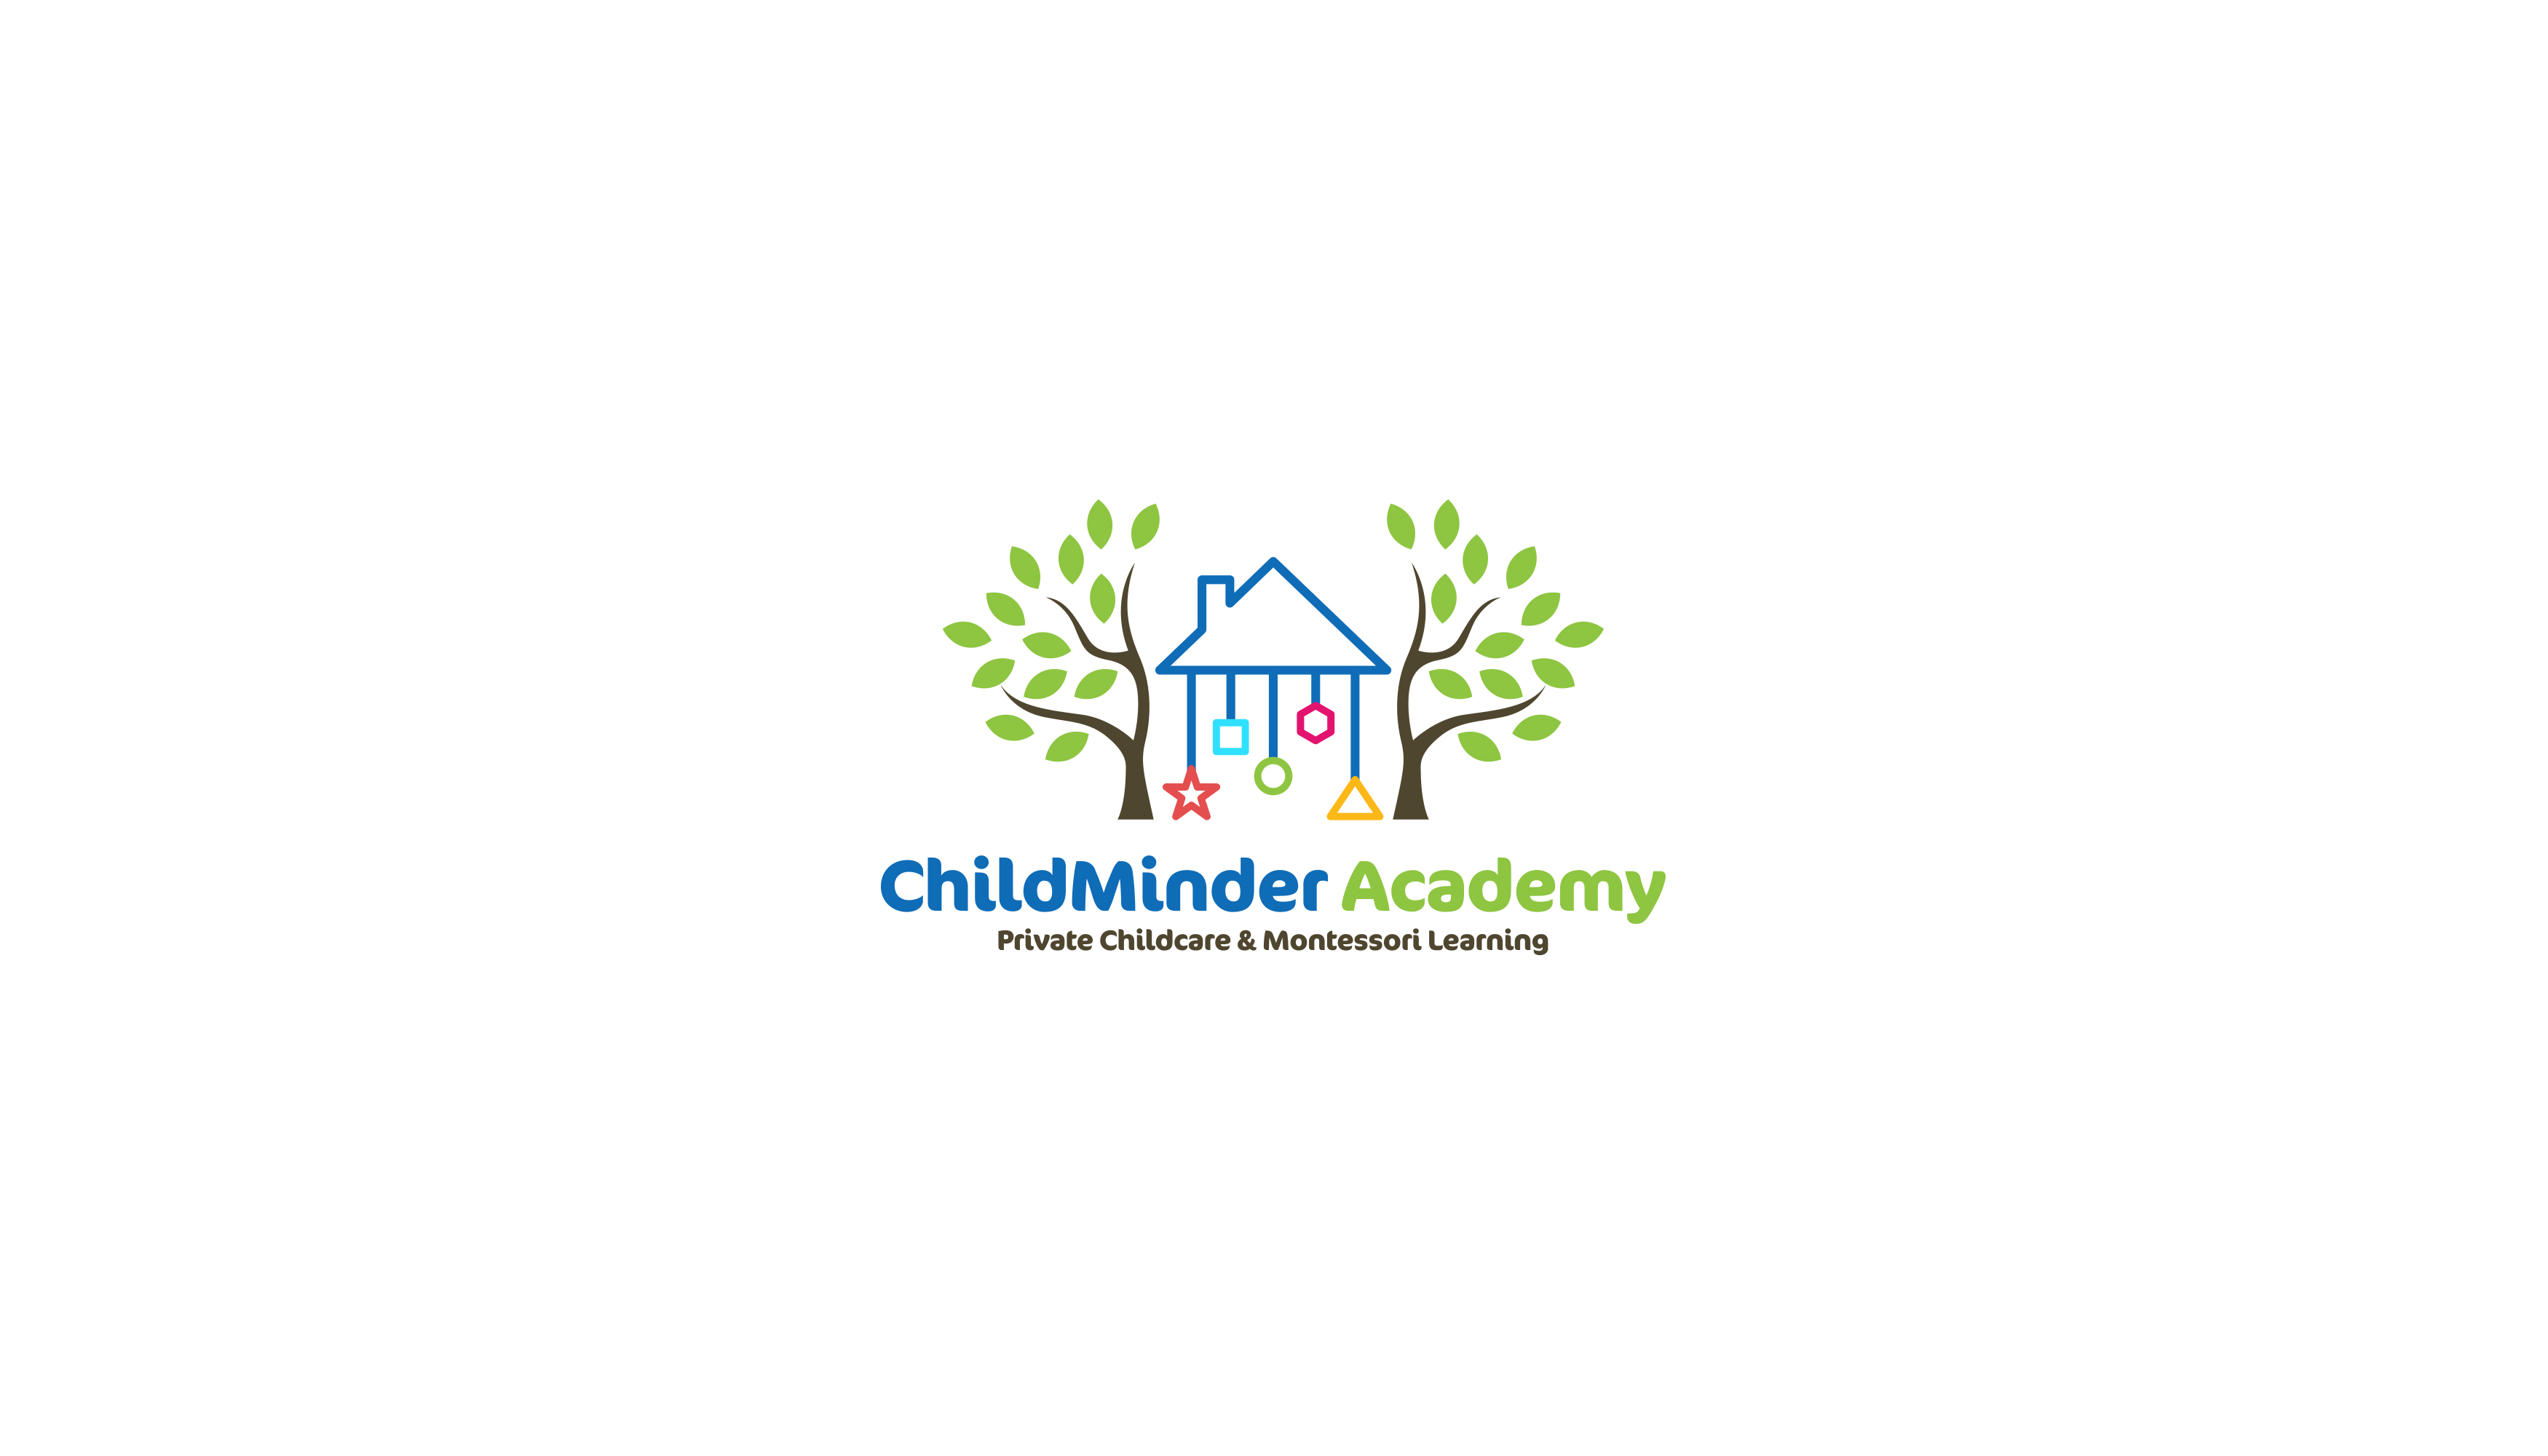 ChildMinder Academy Design #3